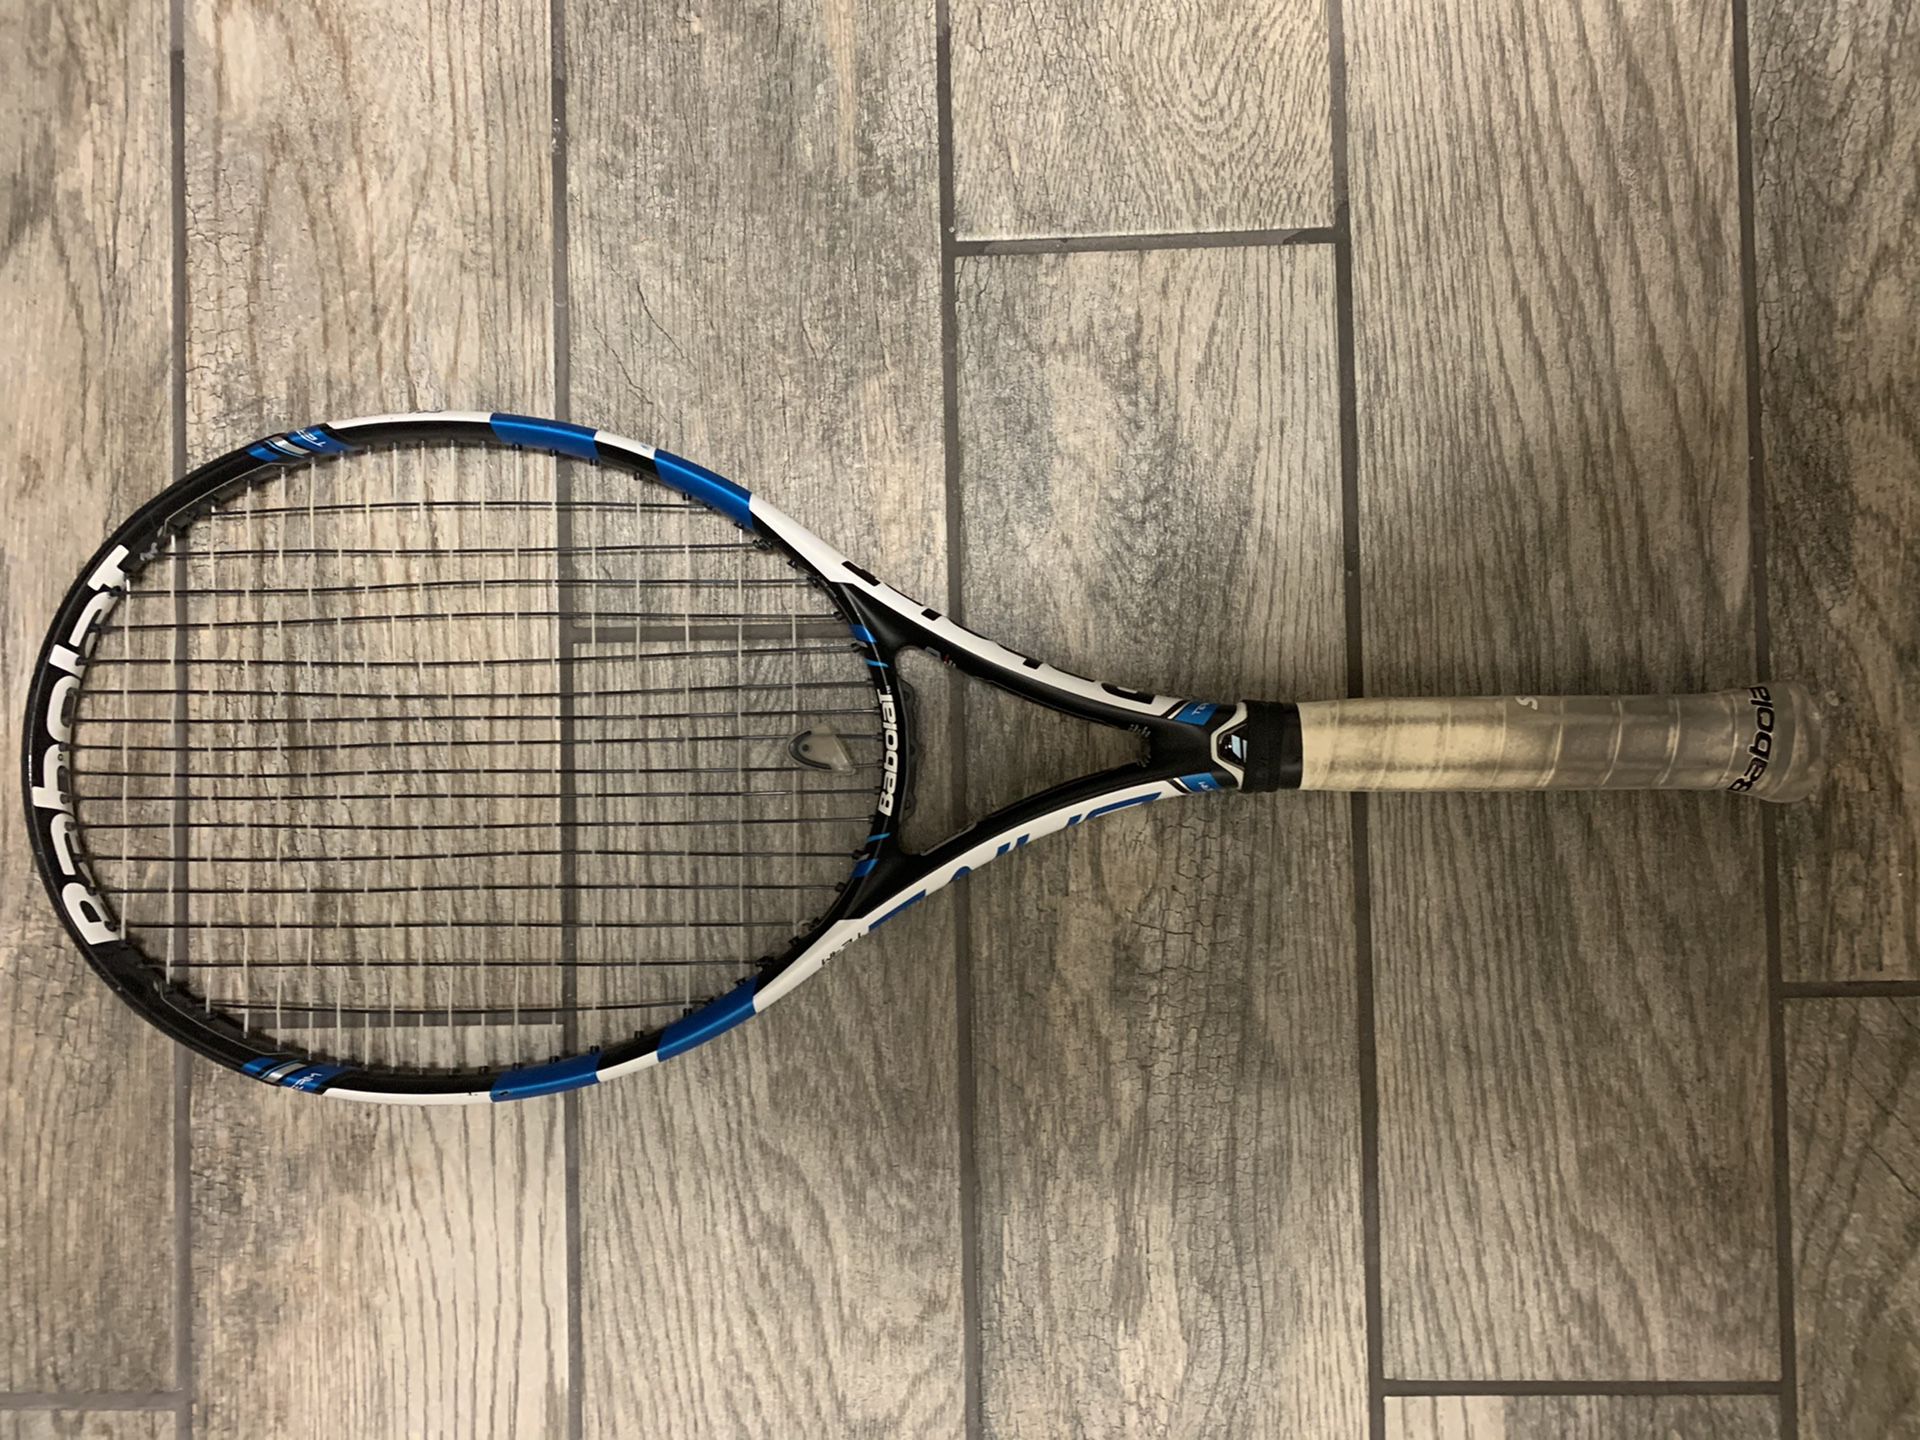 Babolat Tennis racket carbon fiber